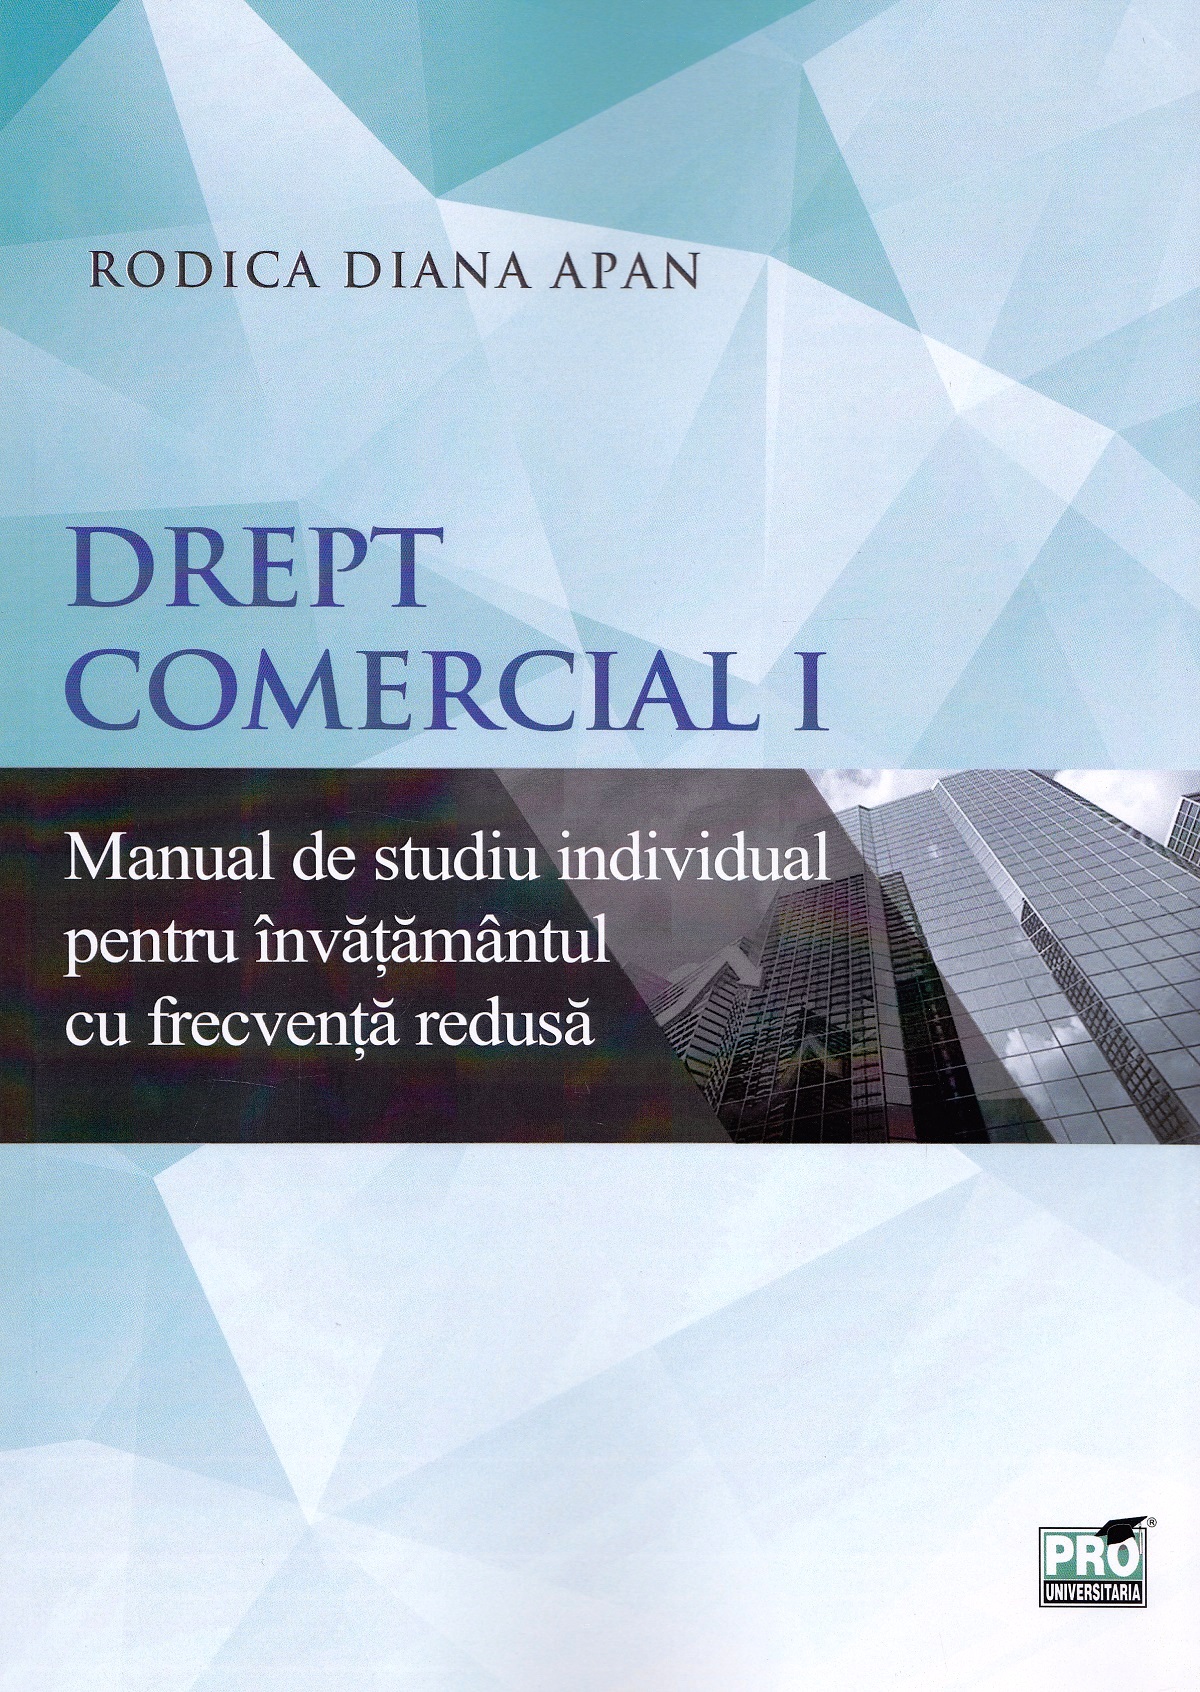 Drept comercial 1. Manual de studiu individual pentru invatamantul cu frecventa redusa - Rodica Diana Apan